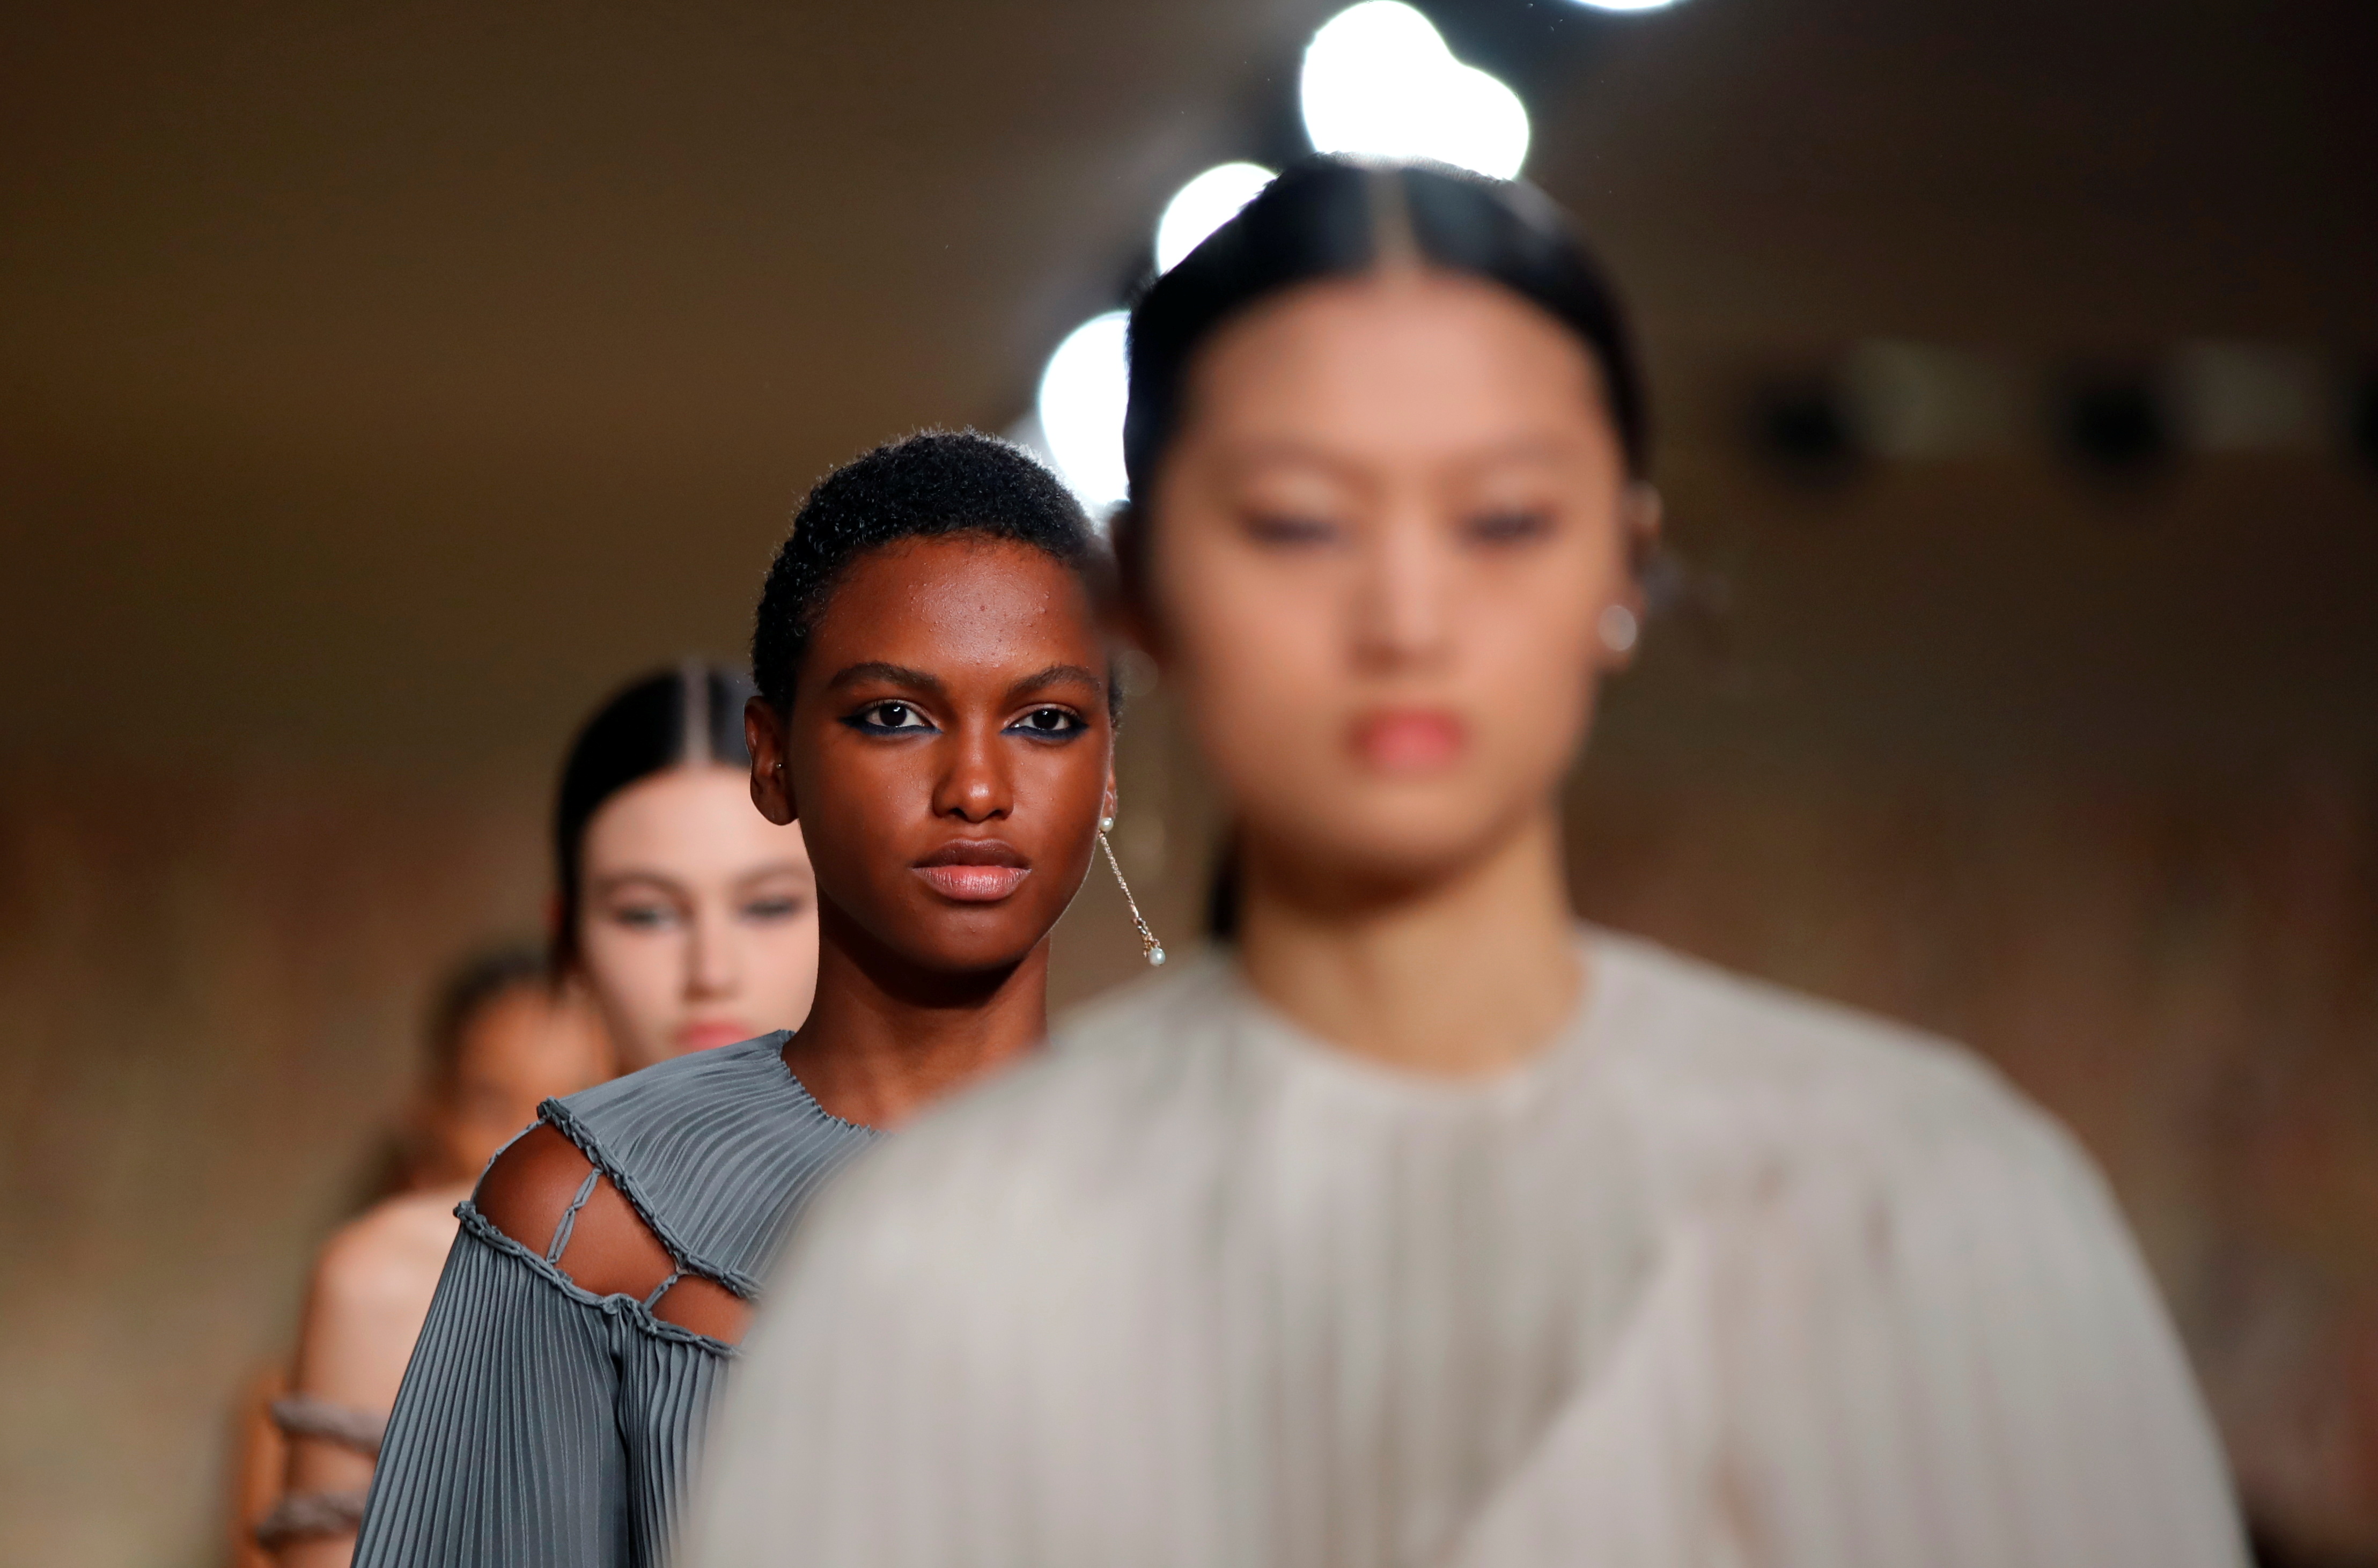 Christian Dior Fall 2022 Couture Fashion Show Details Fashion Show